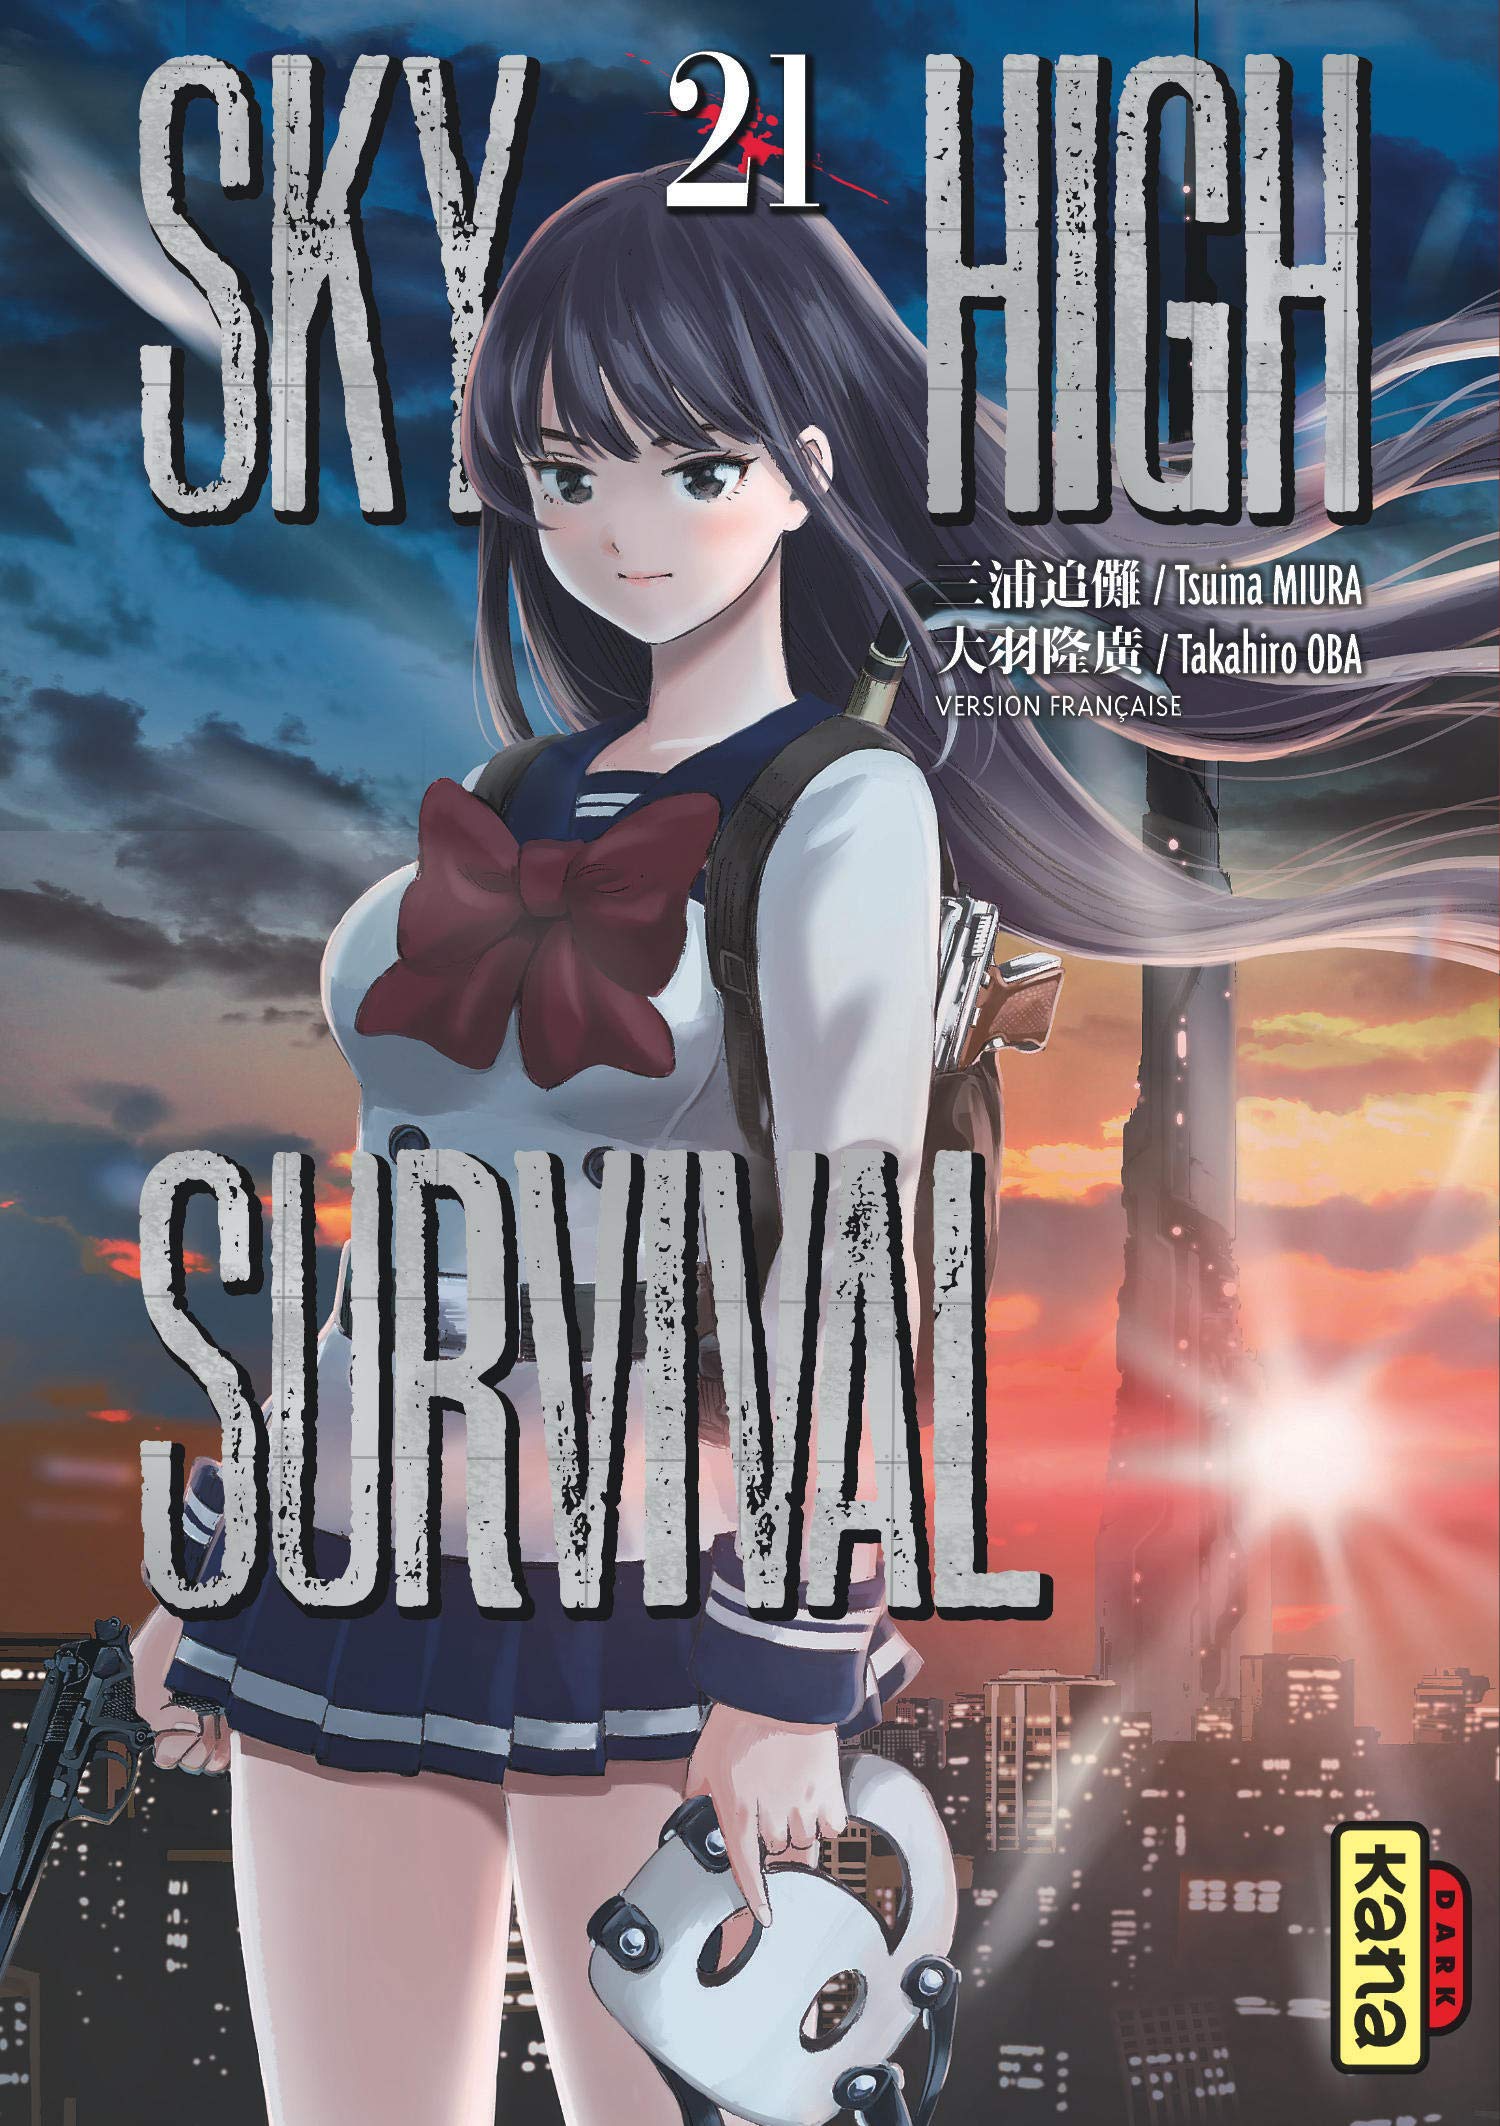 Fastest Sky High Survival